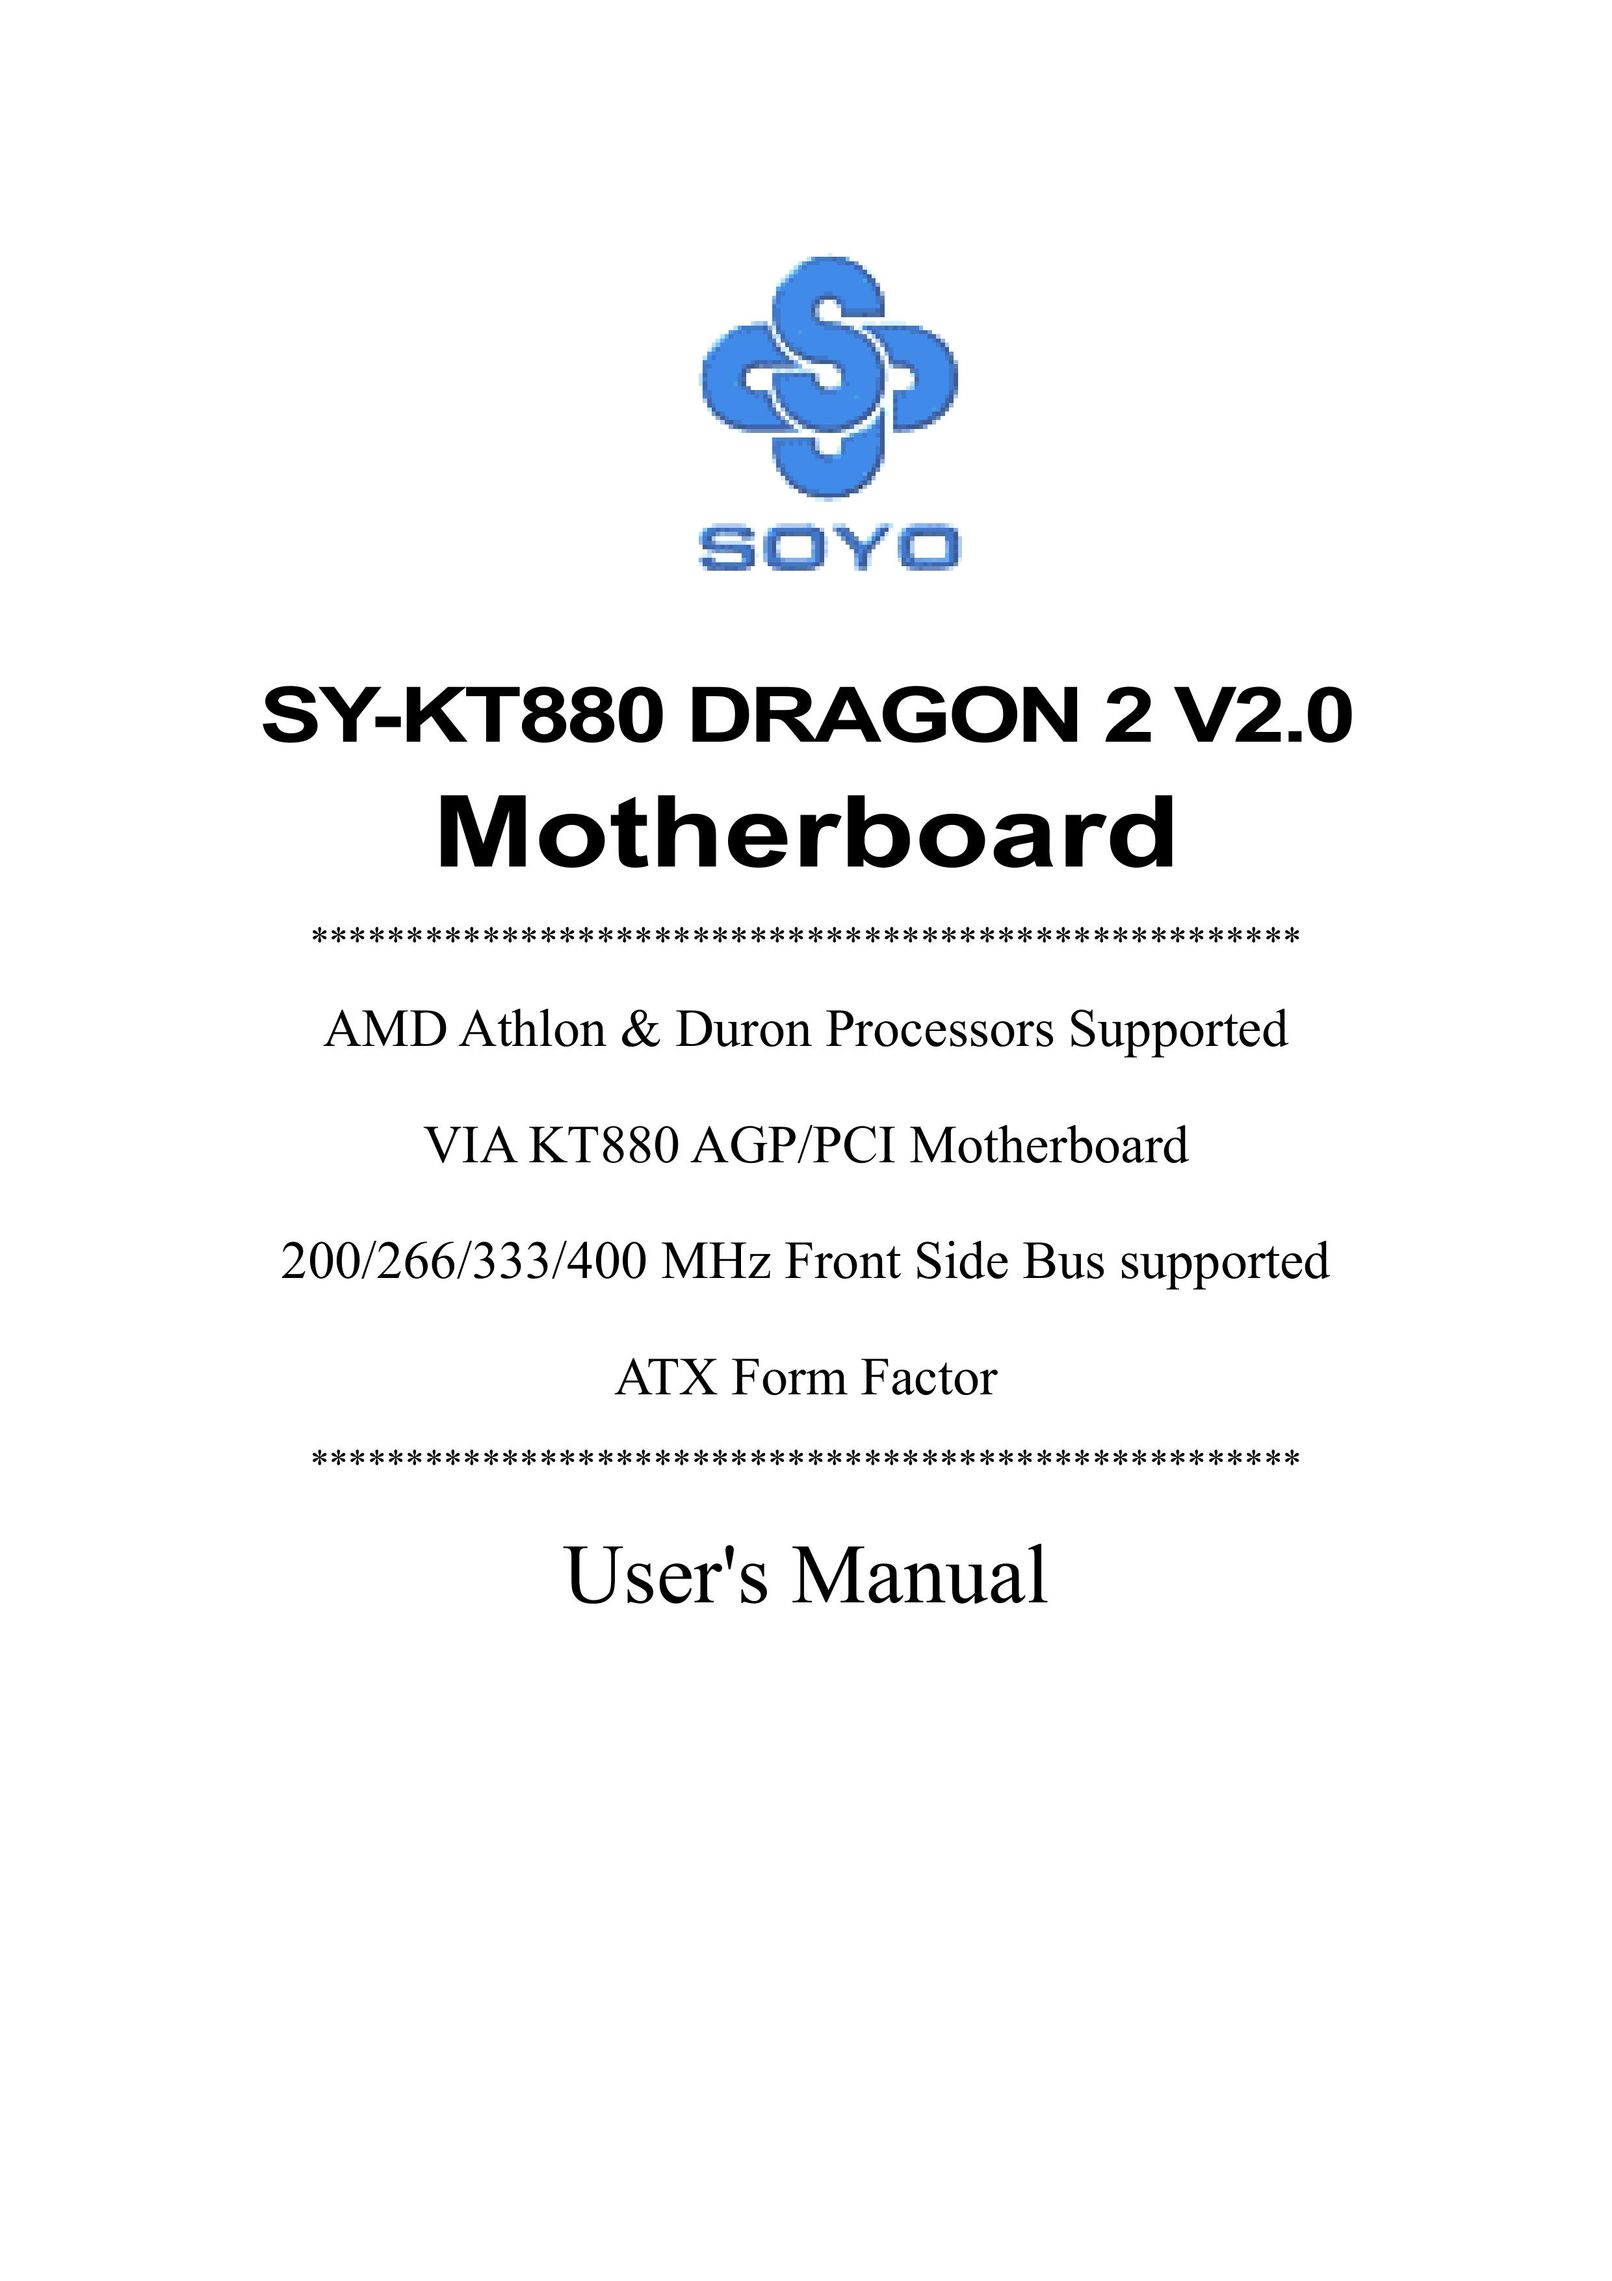 SOYO DRAGON 2 V2.0 Motherboard Computer Hardware User Manual